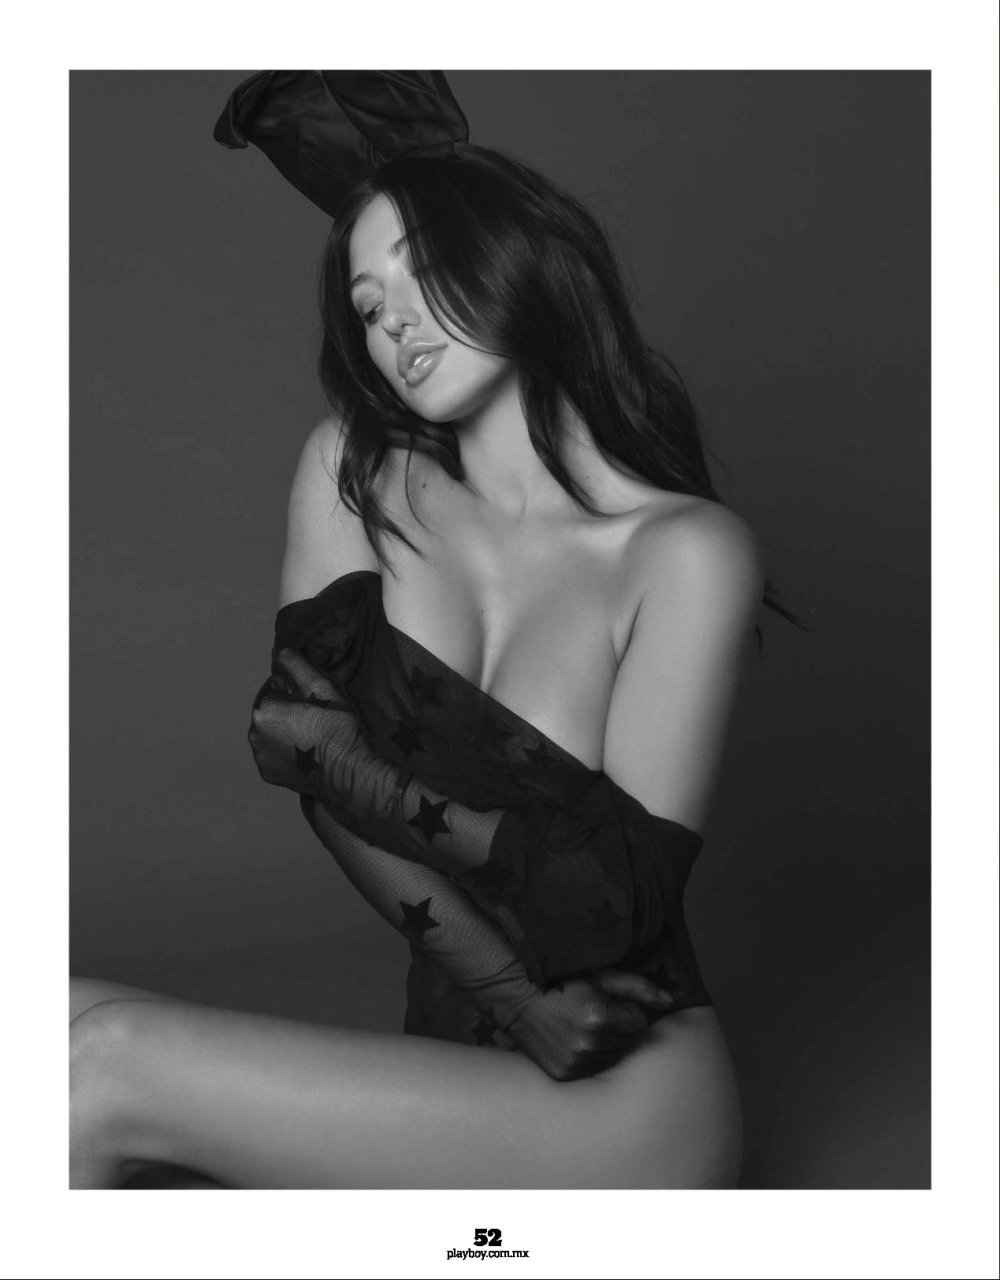 Stefanie Knight Nude & Sexy (16 Photos)